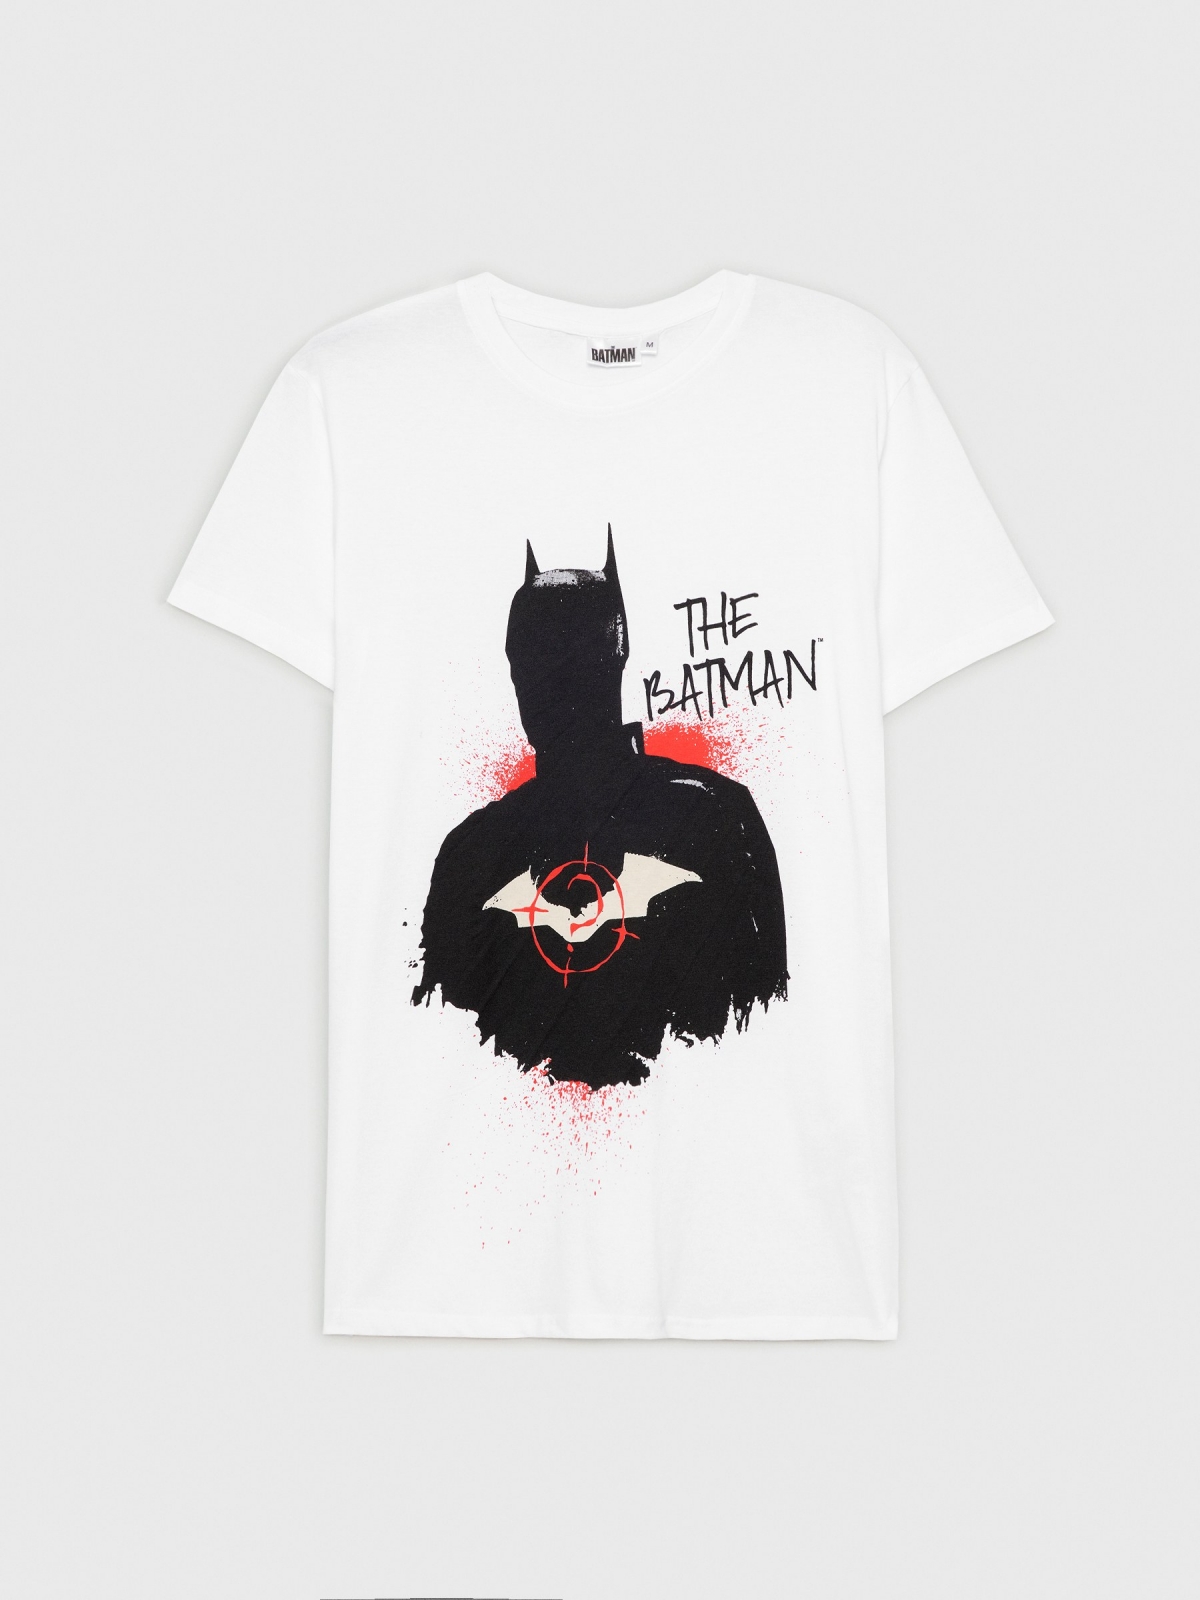  T-shirt do Batman branco